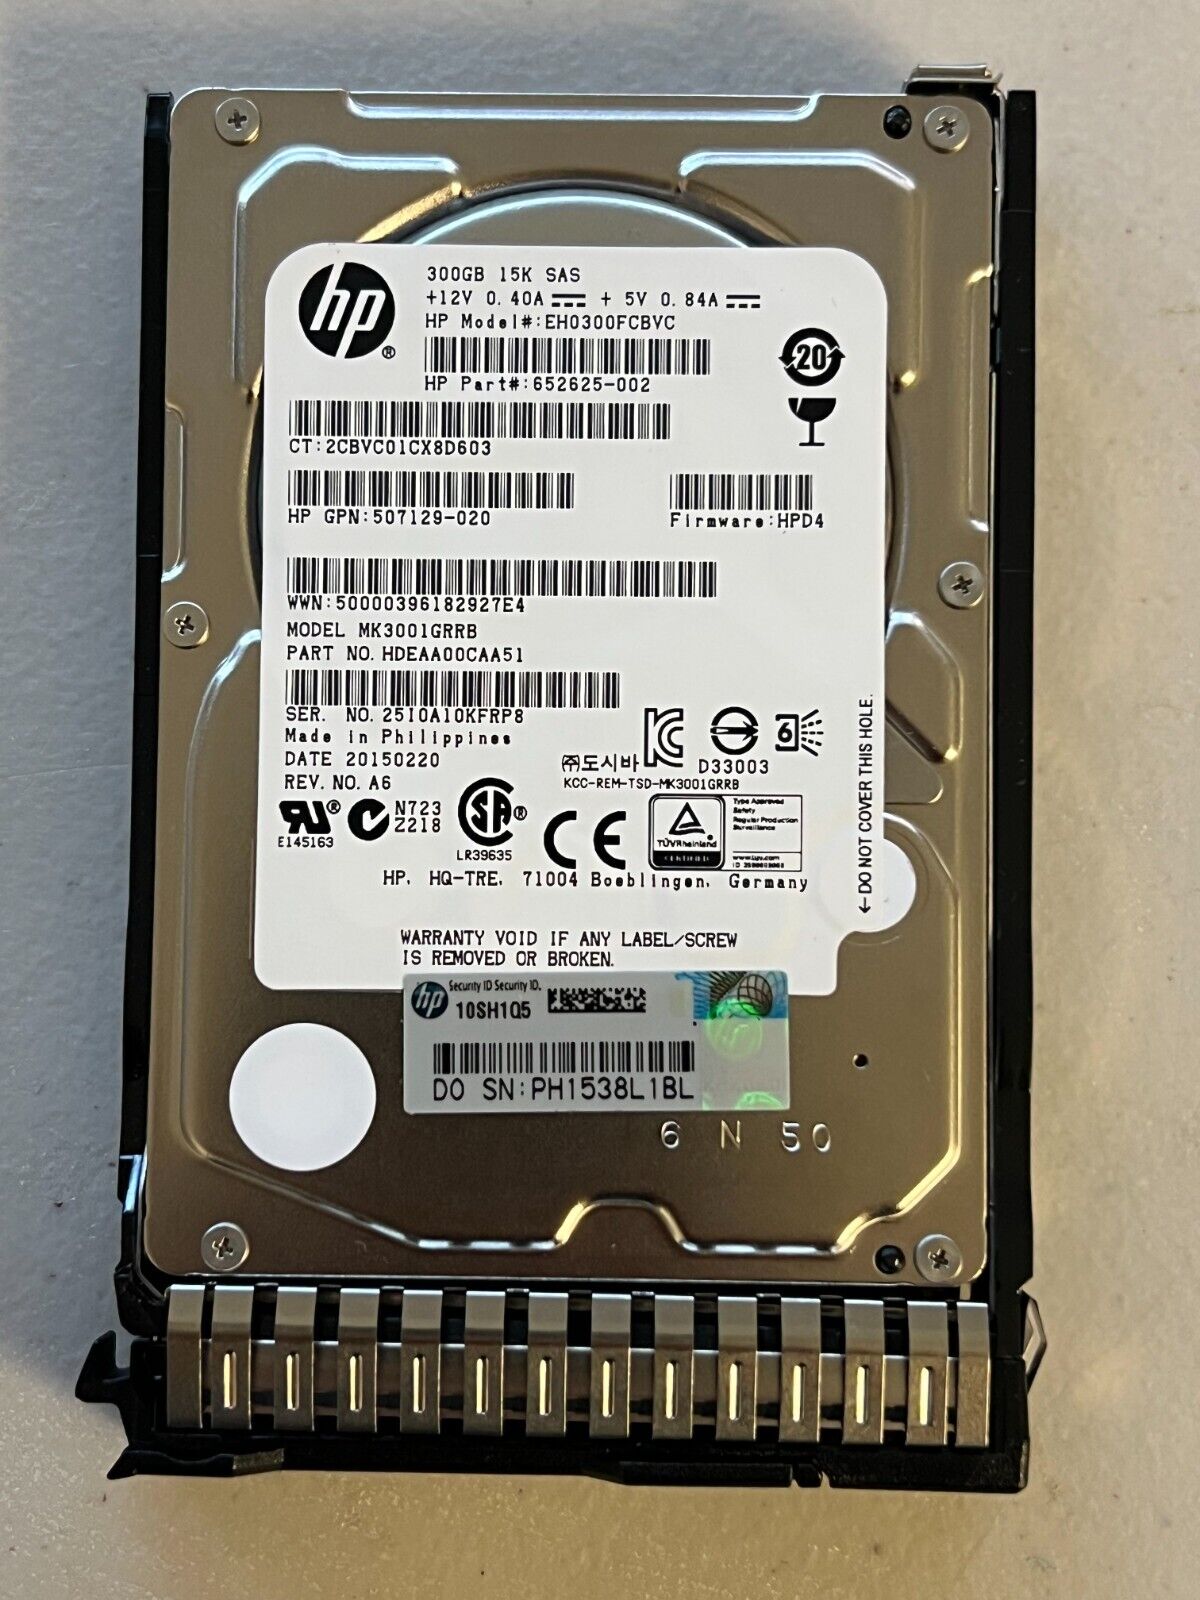 HP 300GB 15k SAS 518216-002 NEW ORIGINAL PACKAGING